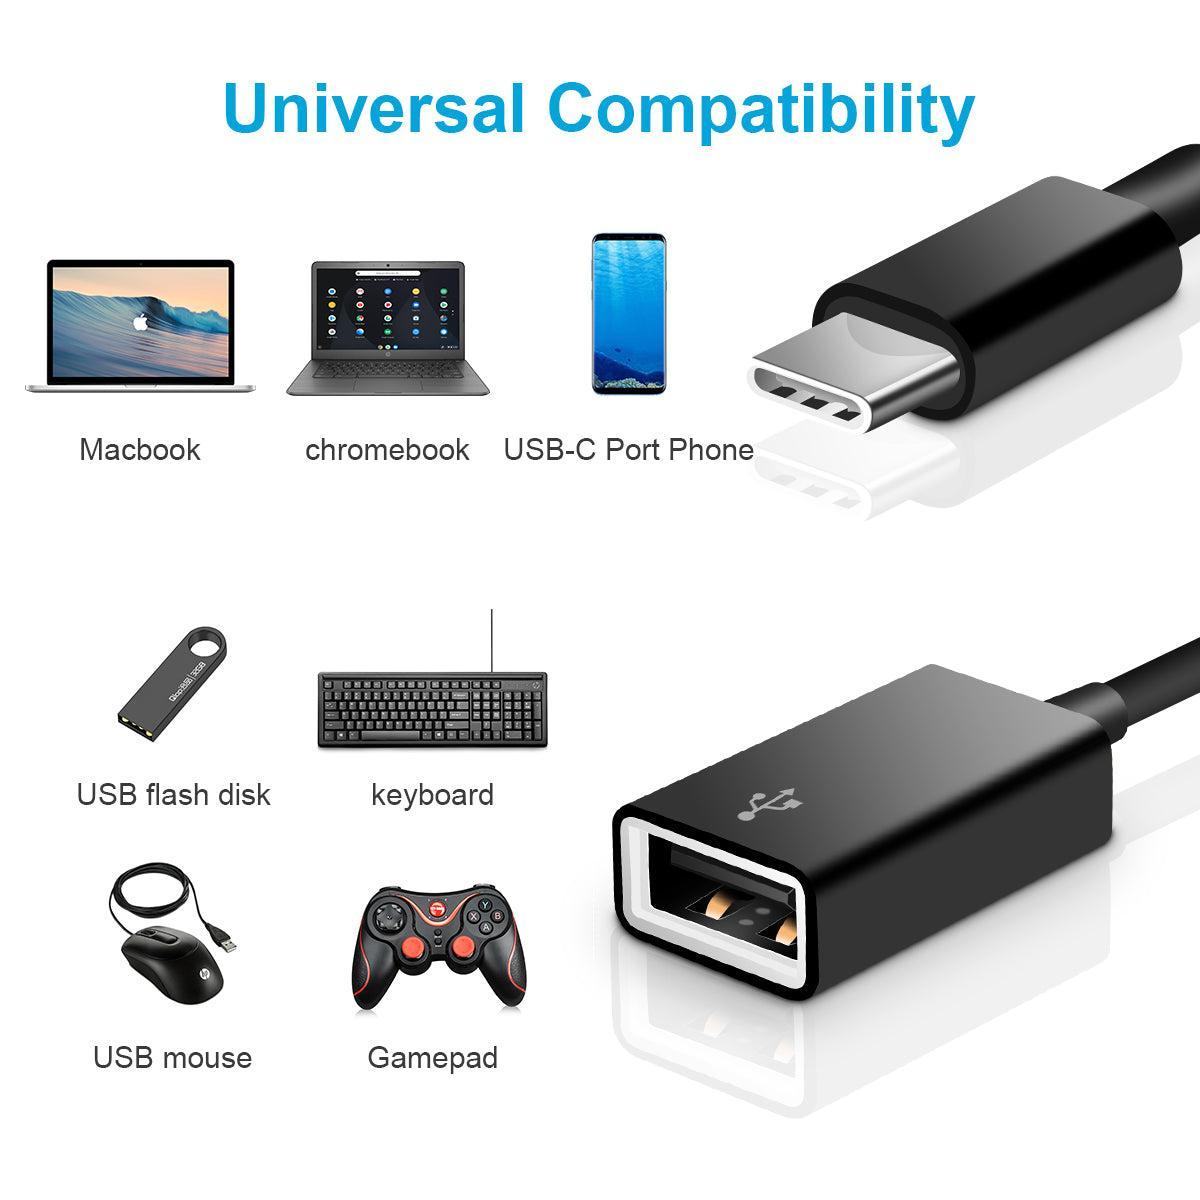 NÖRDIC USB-A OTG til USBC 3.1 Gene 1 Adapter Aluminium 50cm Svart USB-C OTG-kabel